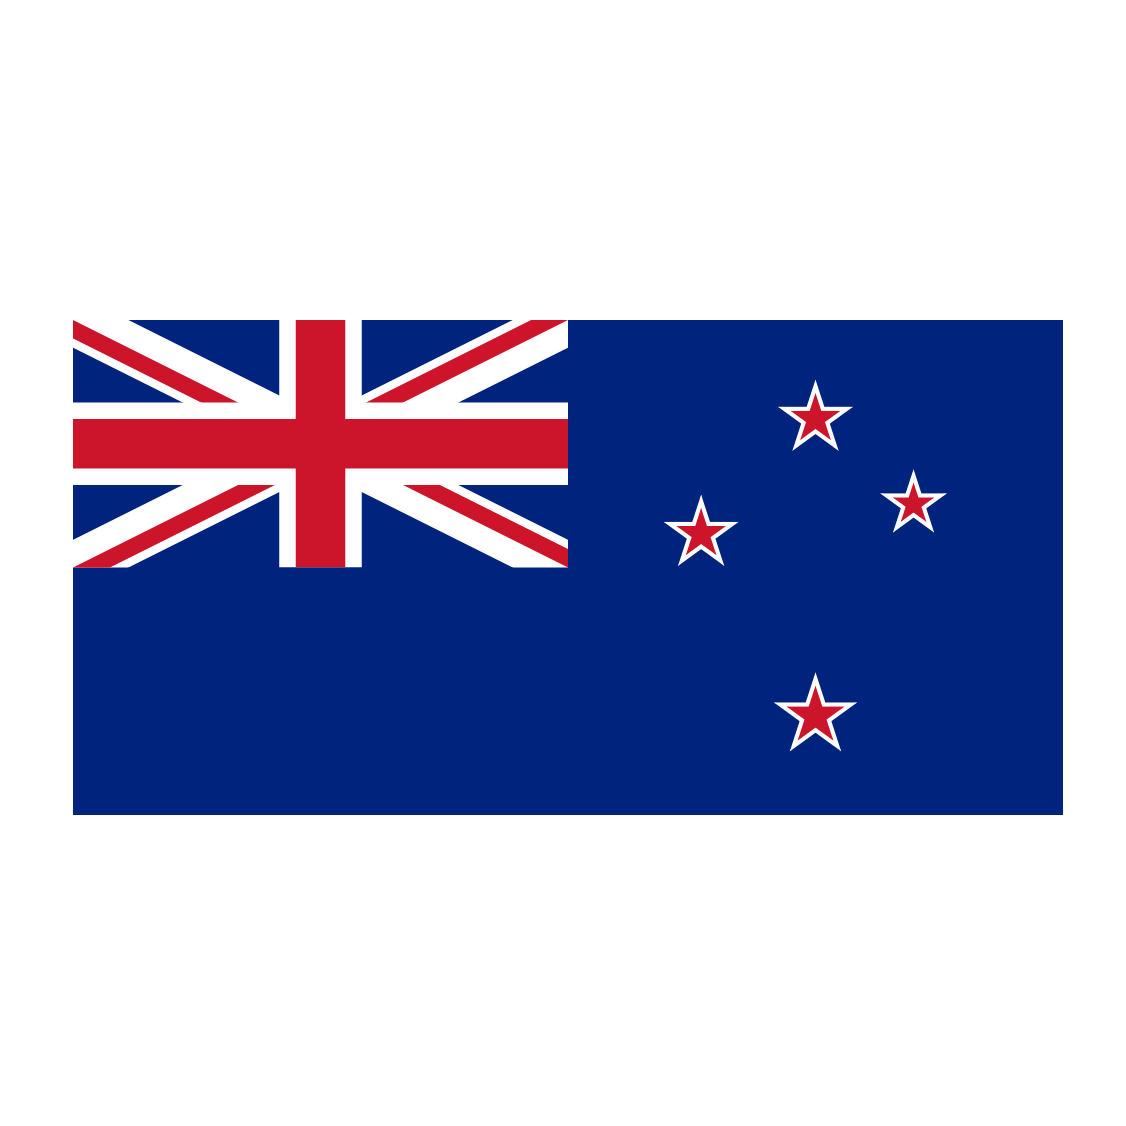 Flag of New Zealand PNG HD and Transparent pngteam.com